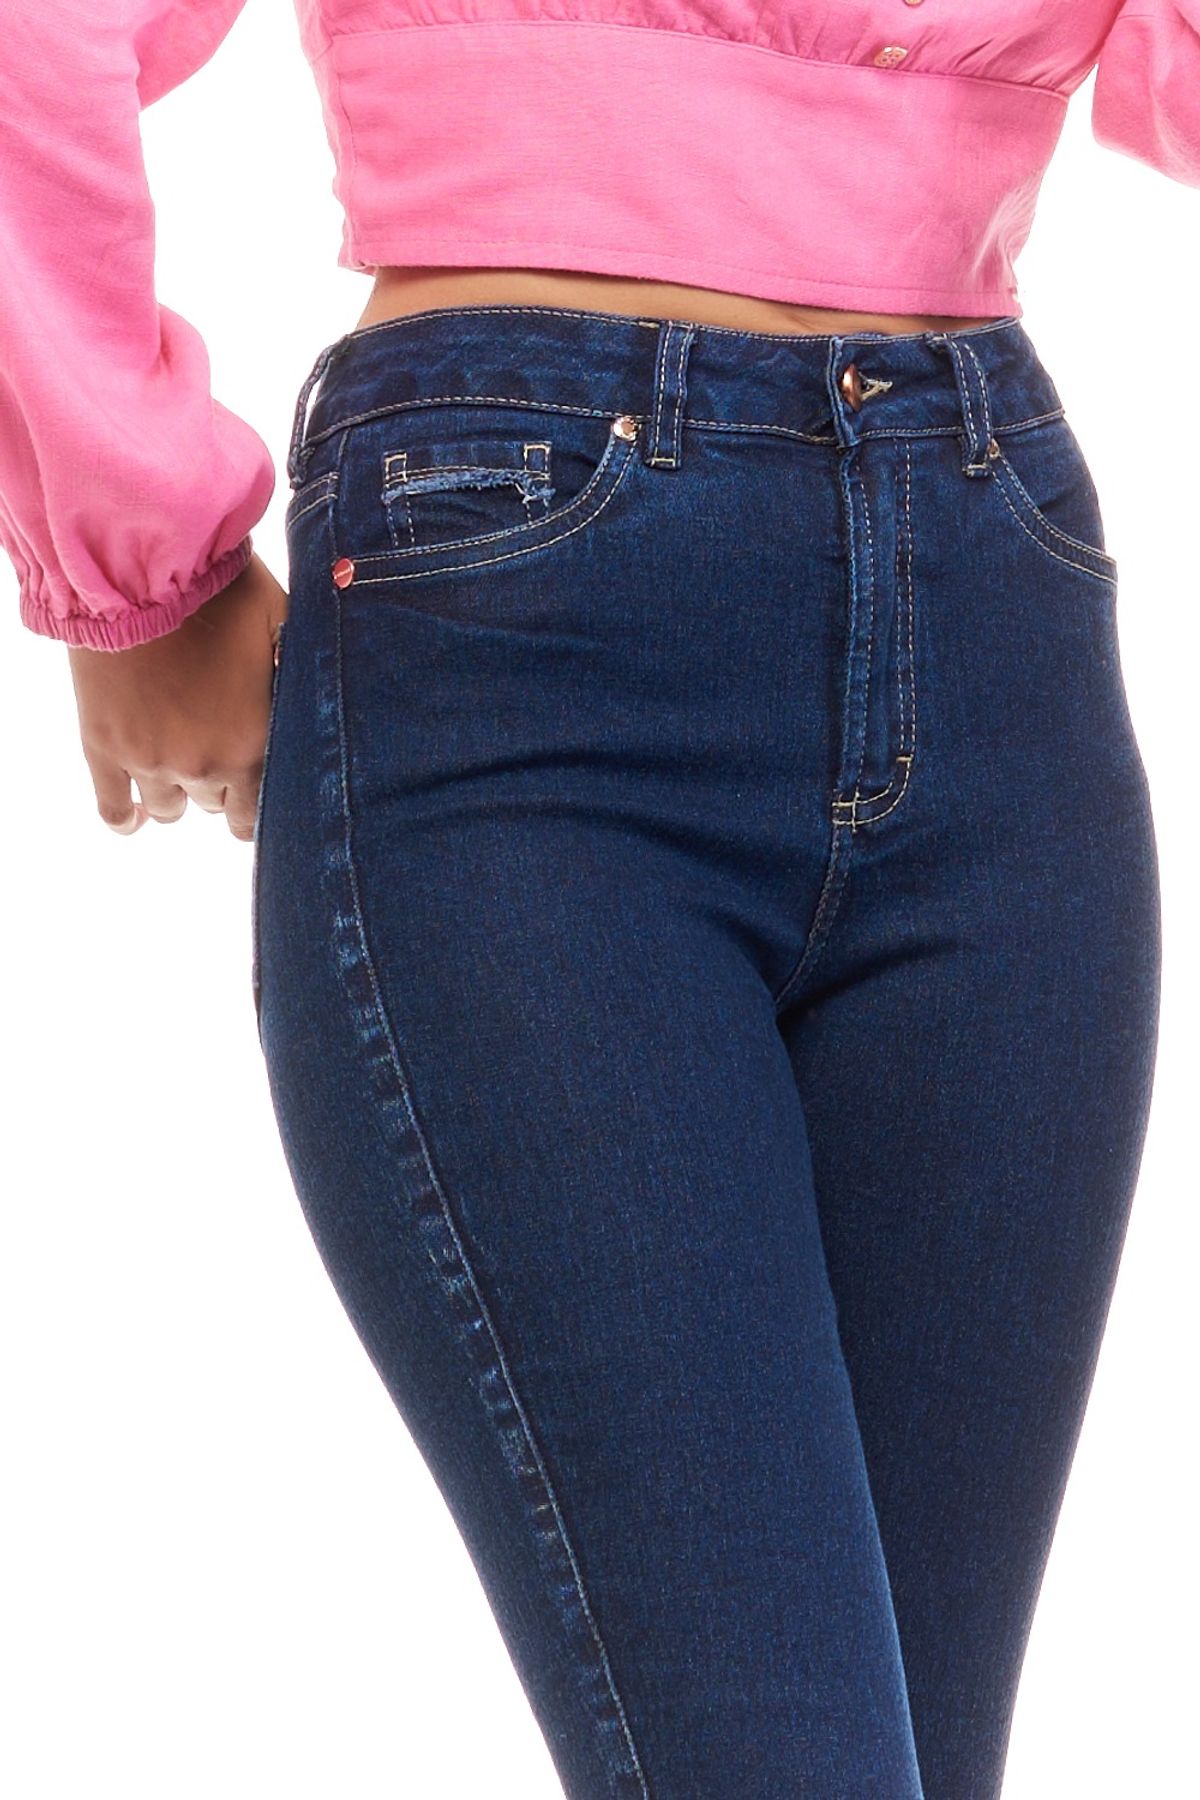 Melody jeans para meninas jeans jeggings 4 cores mulher magro pantalones  vaqueros mujer feminino jean